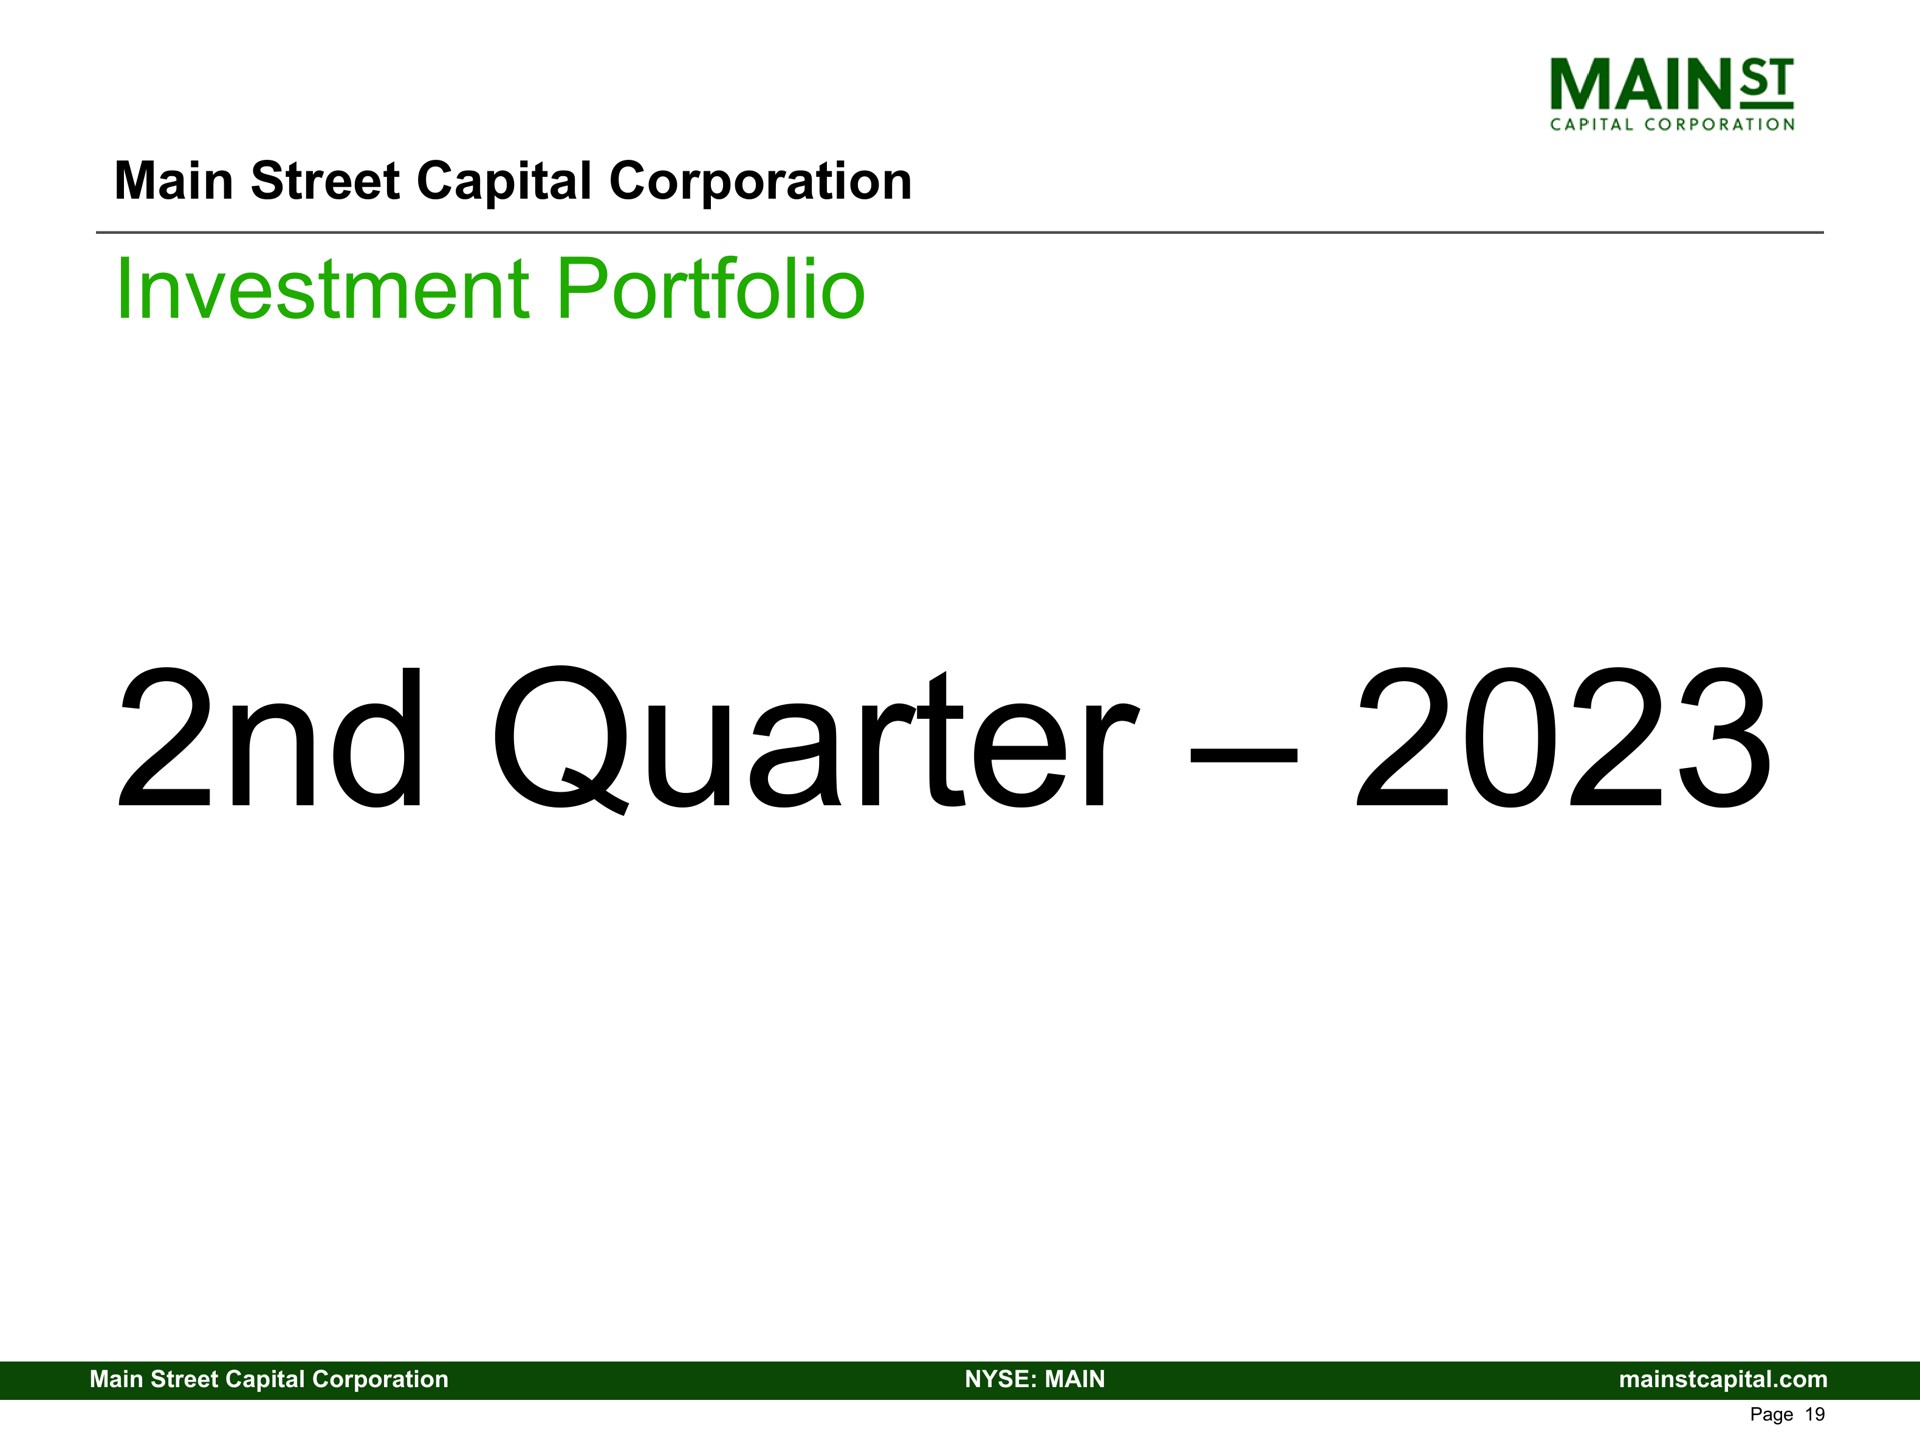 main street capital corporation investment portfolio quarter mains | Main Street Capital